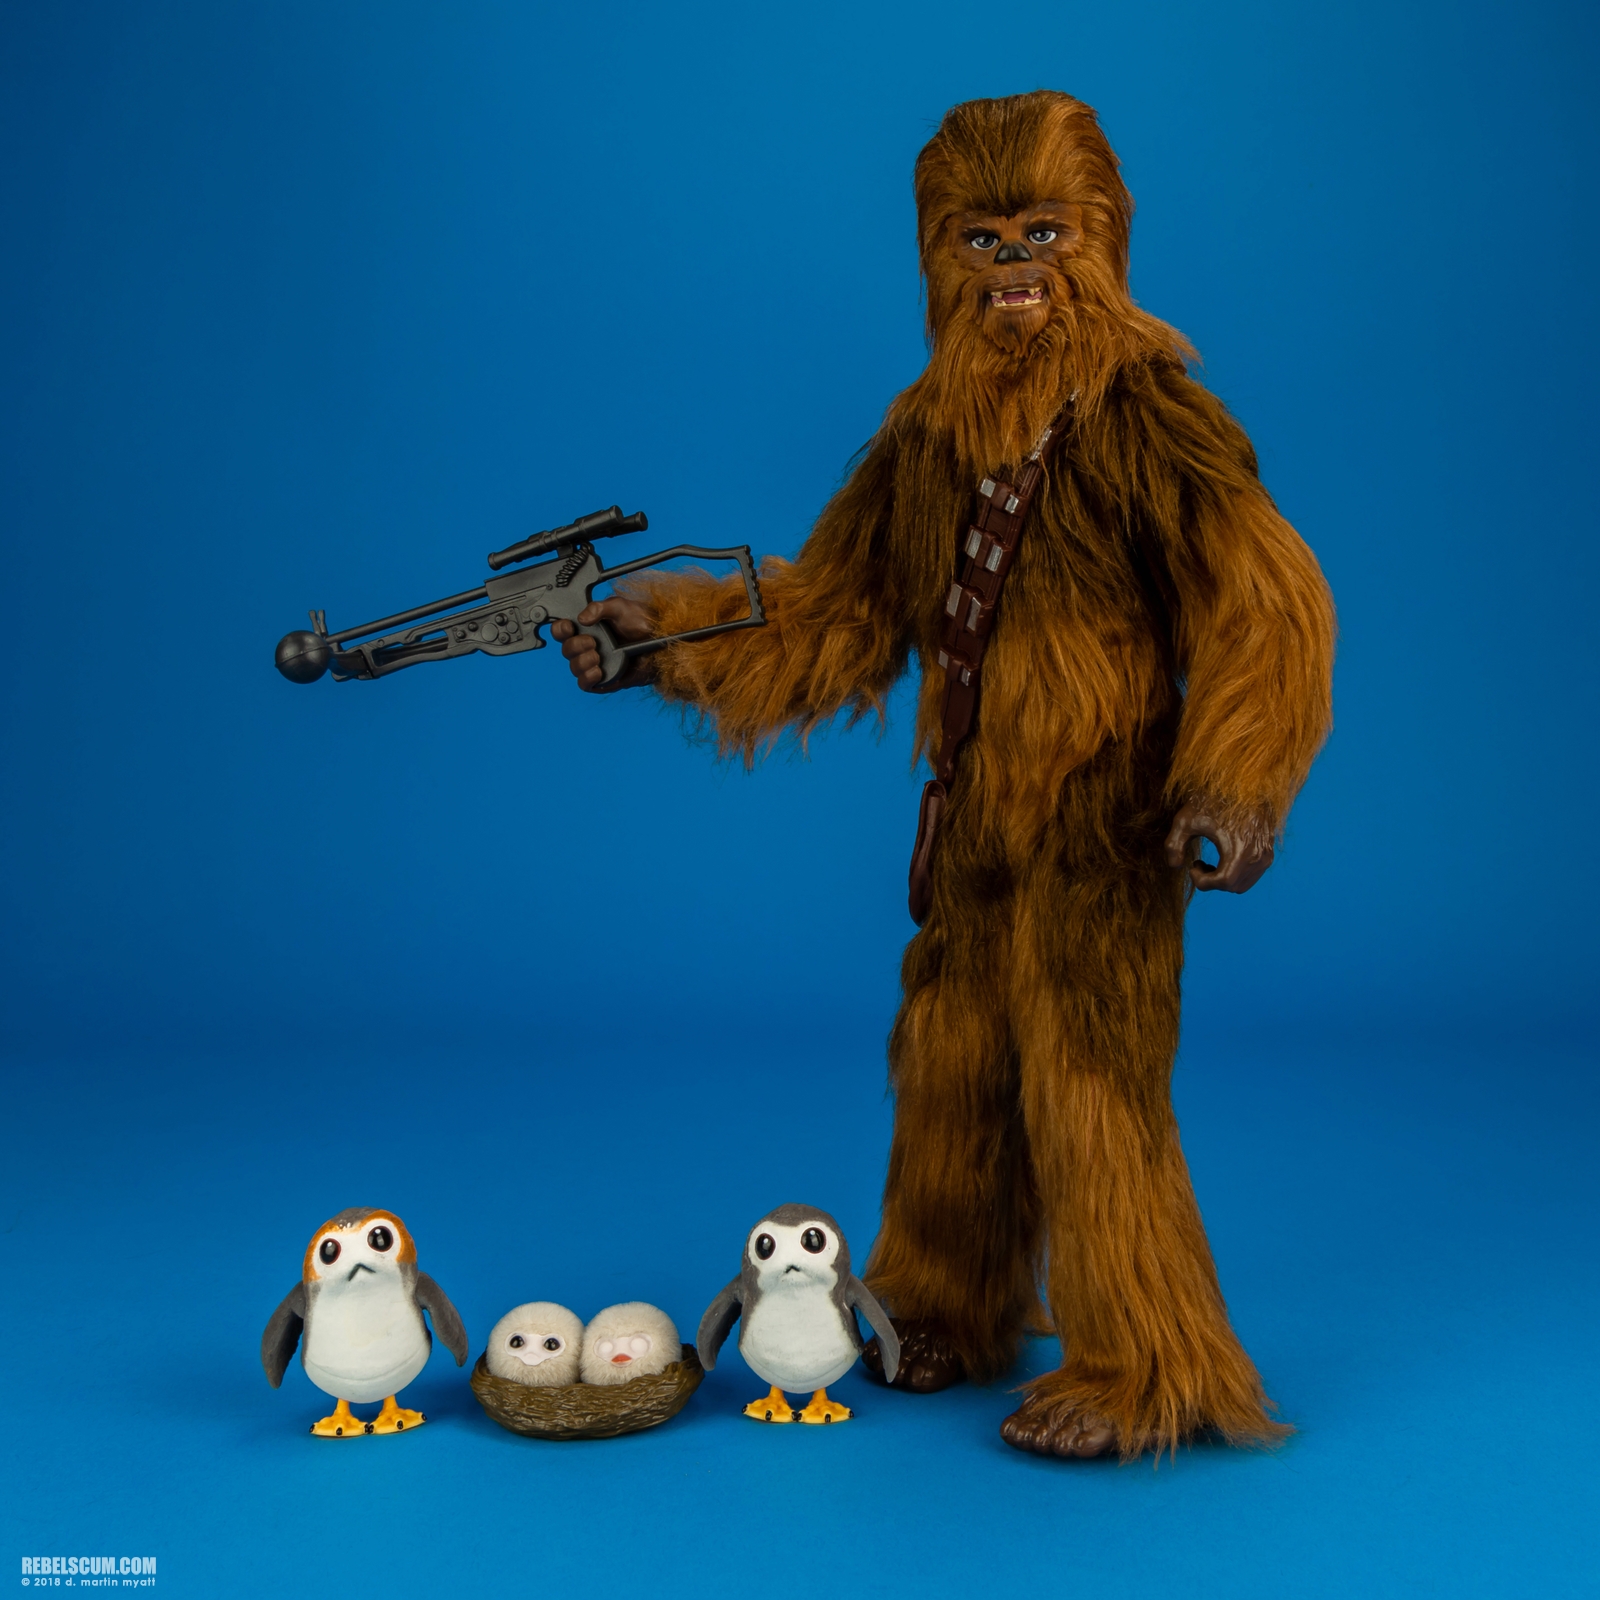 Chewbacca-Porgs-Forces-of-Destiny-Hasbro-Star-Wars-011.jpg